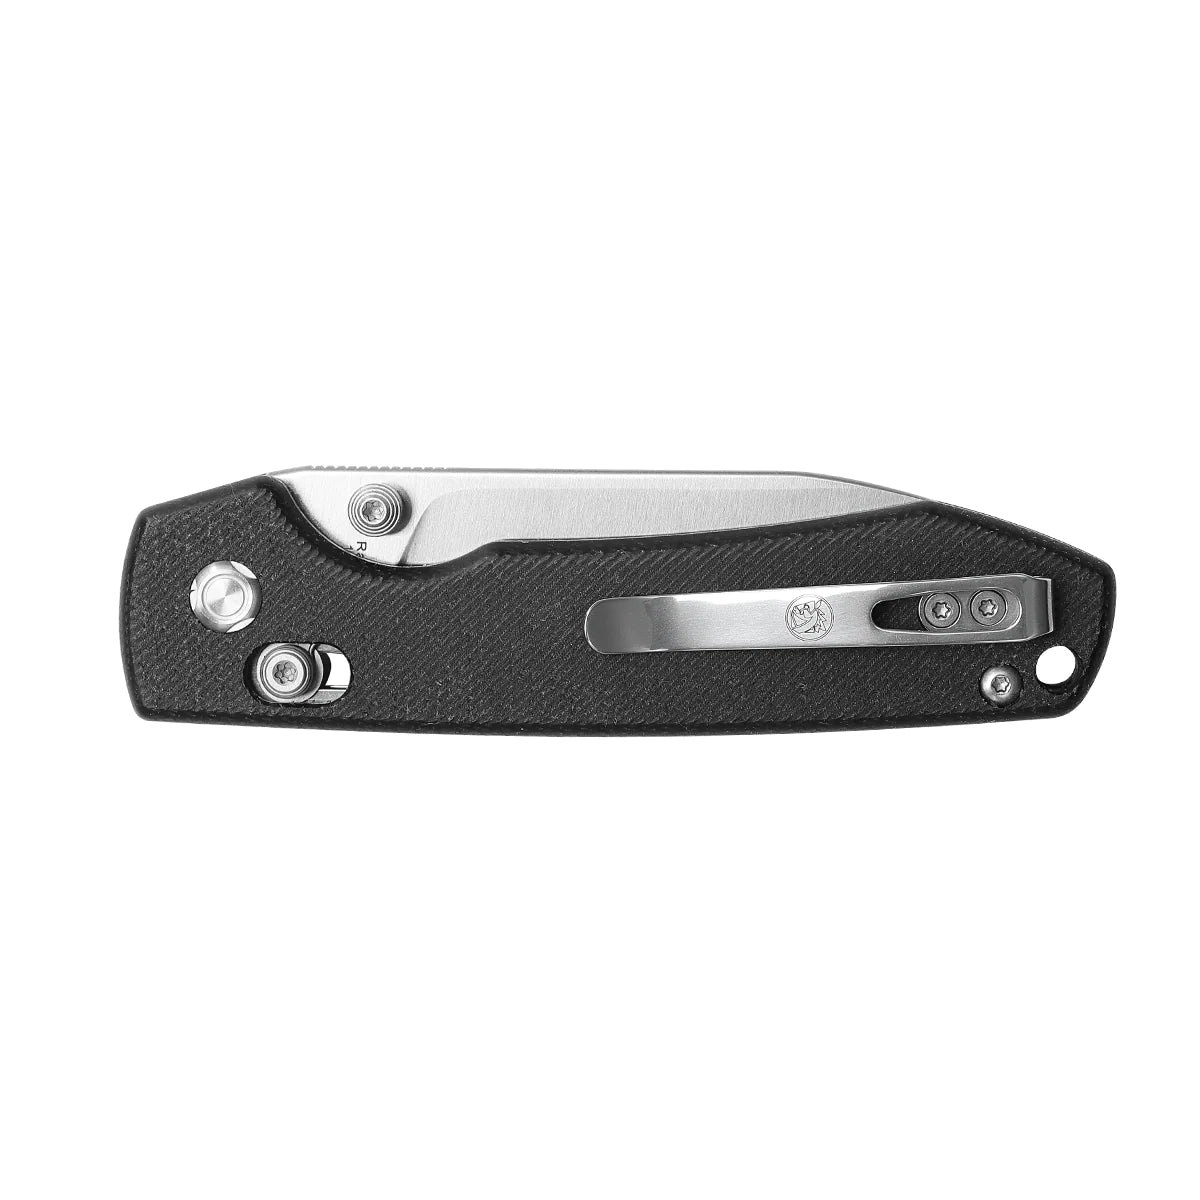 Vosteed Raccoon - Crossbar Lock Knife (3.25" 14C28N Blade & Micarta Handle) - RCCB32VTMK